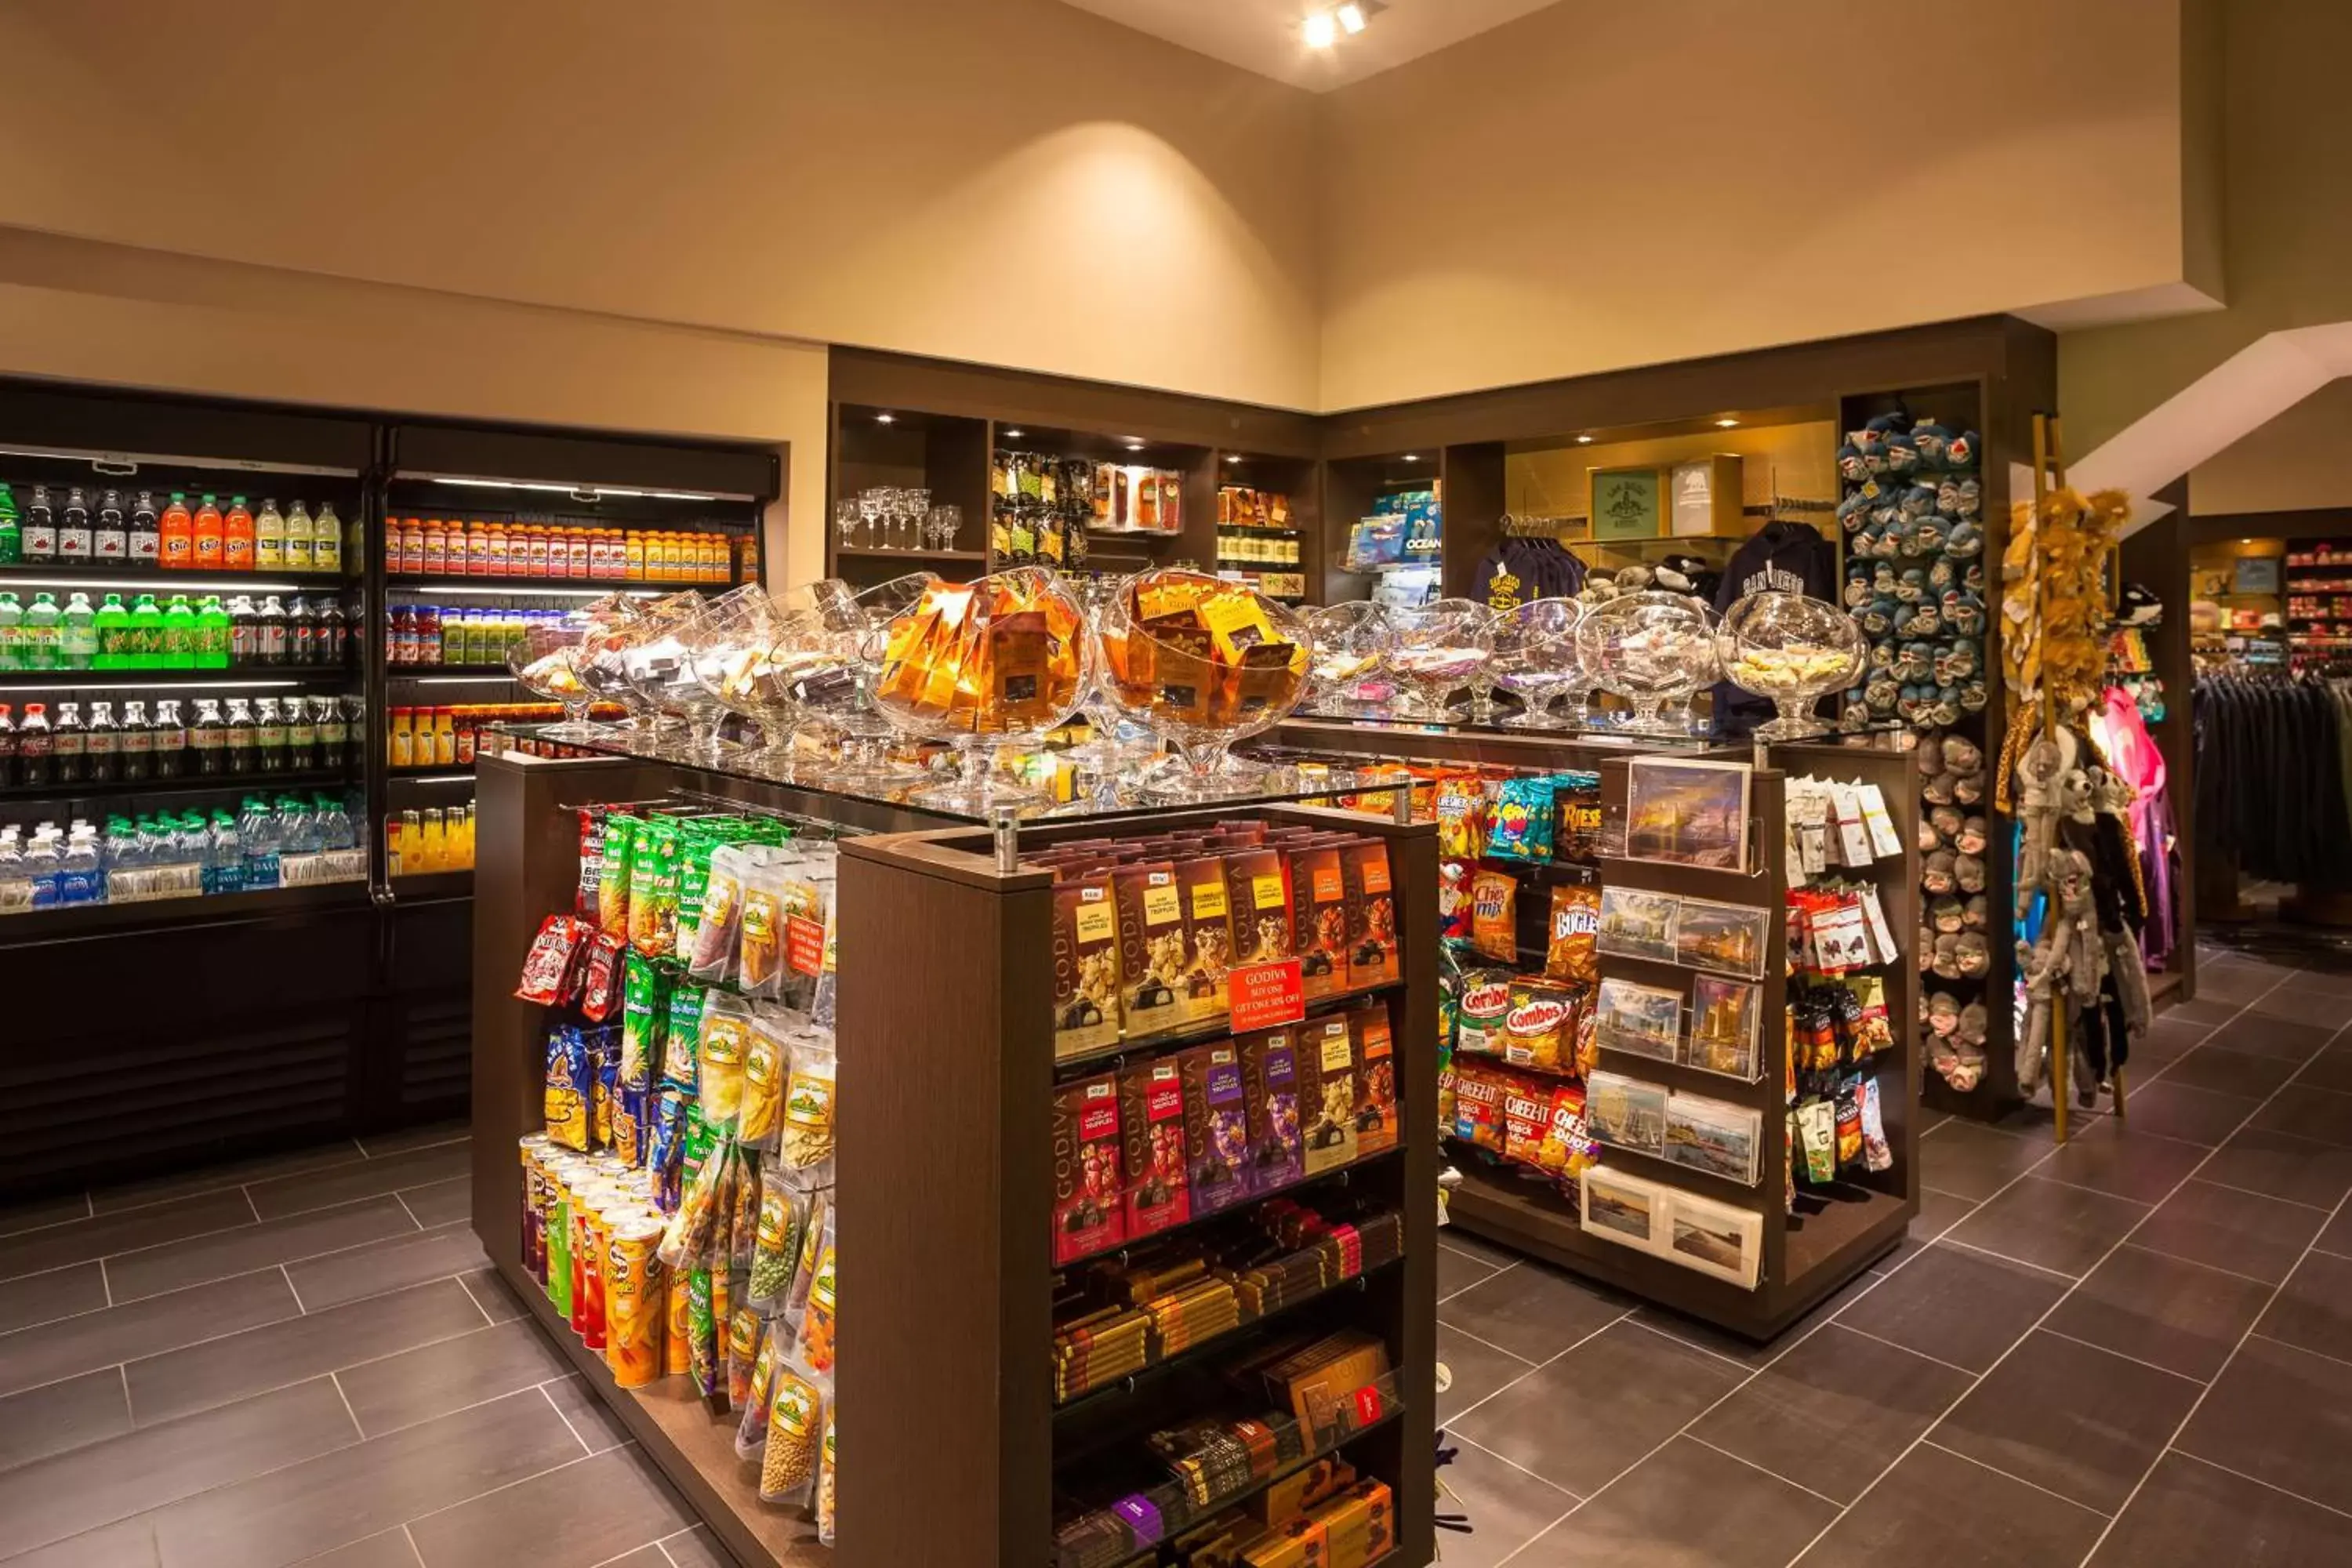 Restaurant/places to eat, Supermarket/Shops in Manchester Grand Hyatt San Diego